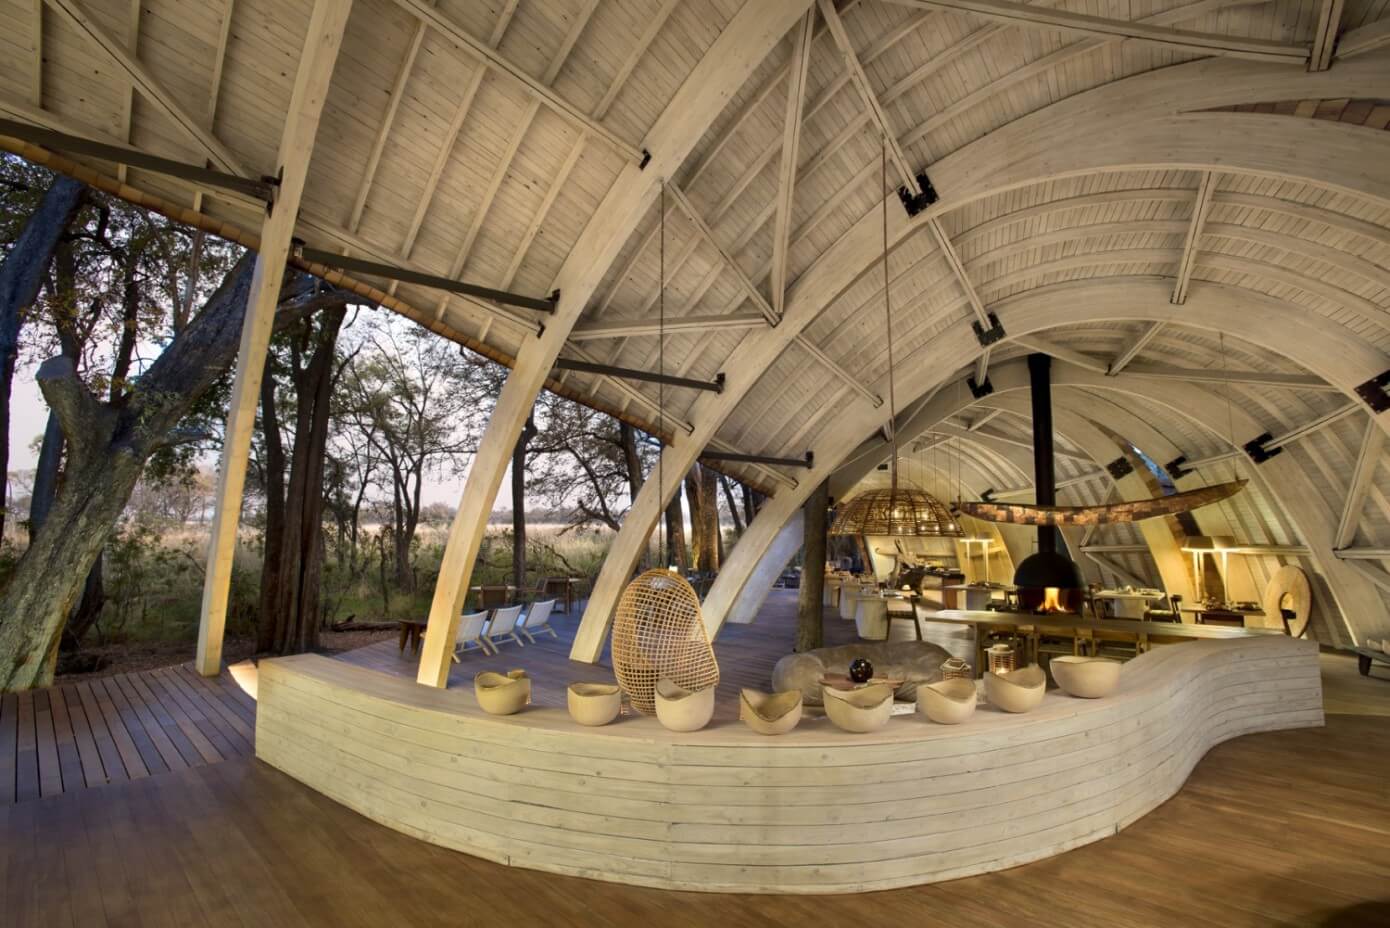 Sandibe Safari Lodge by Michaelis Boyd